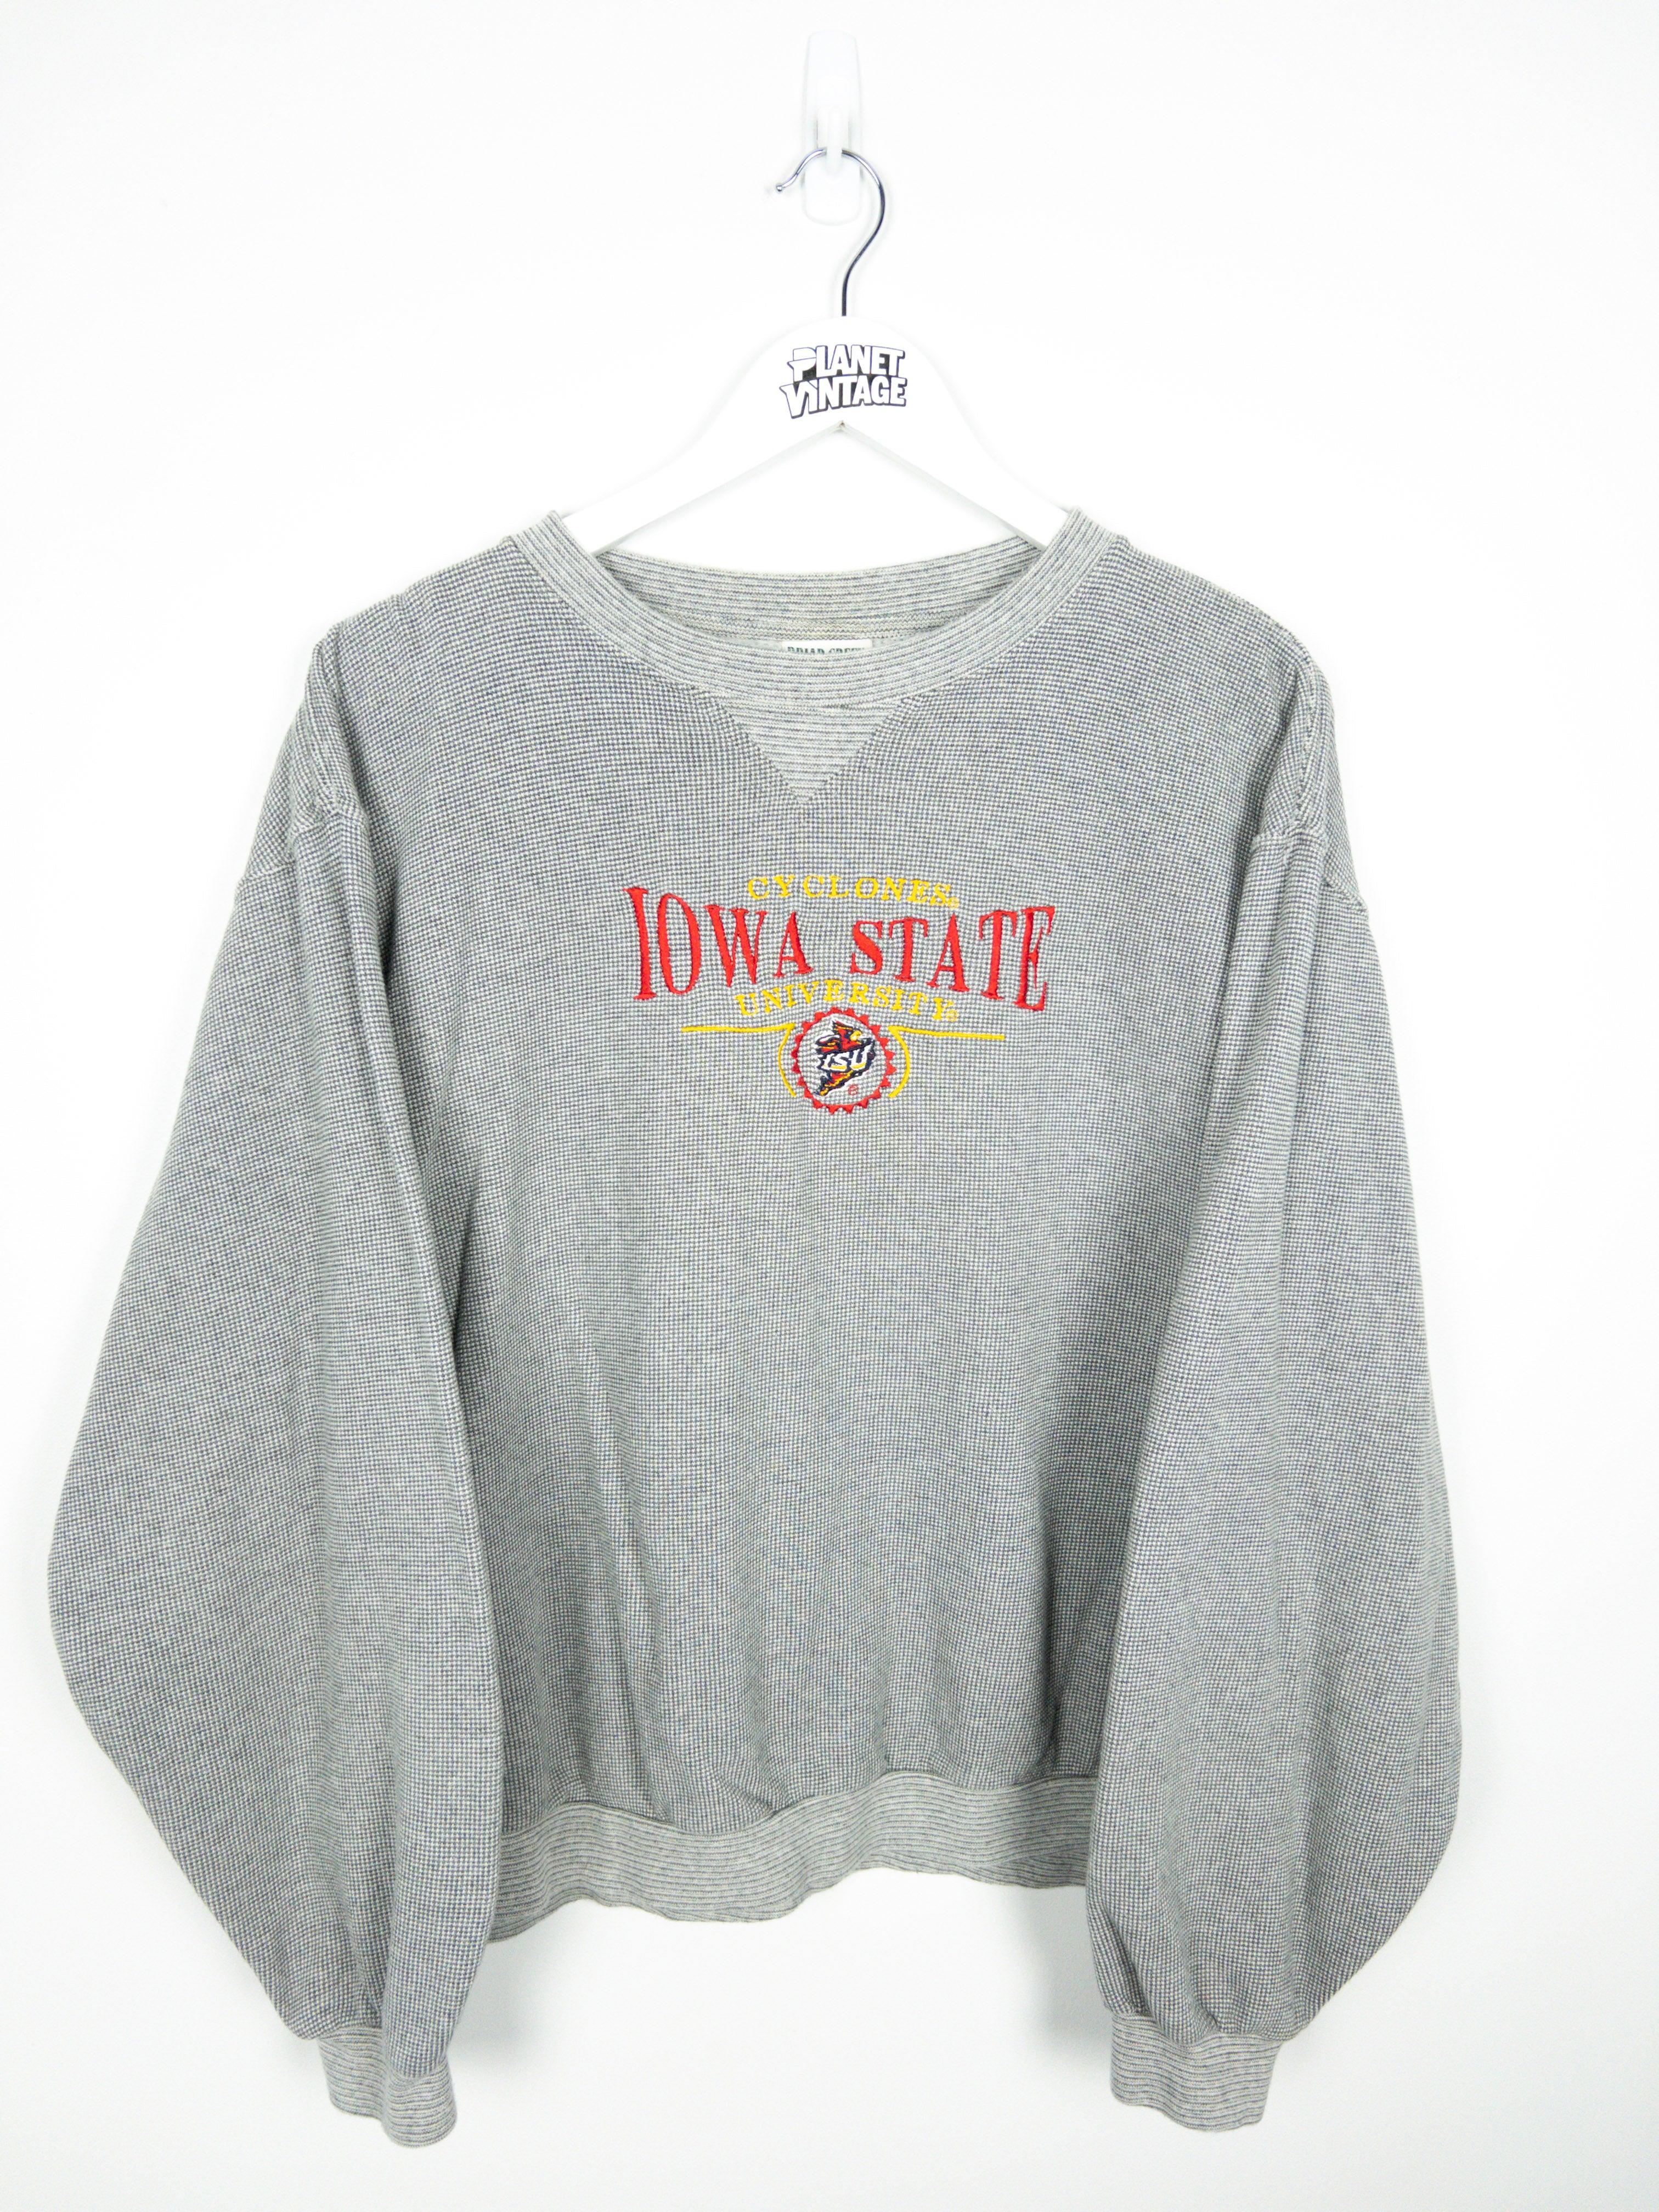 Iowa State University Sweatshirt (M) - Planet Vintage Store